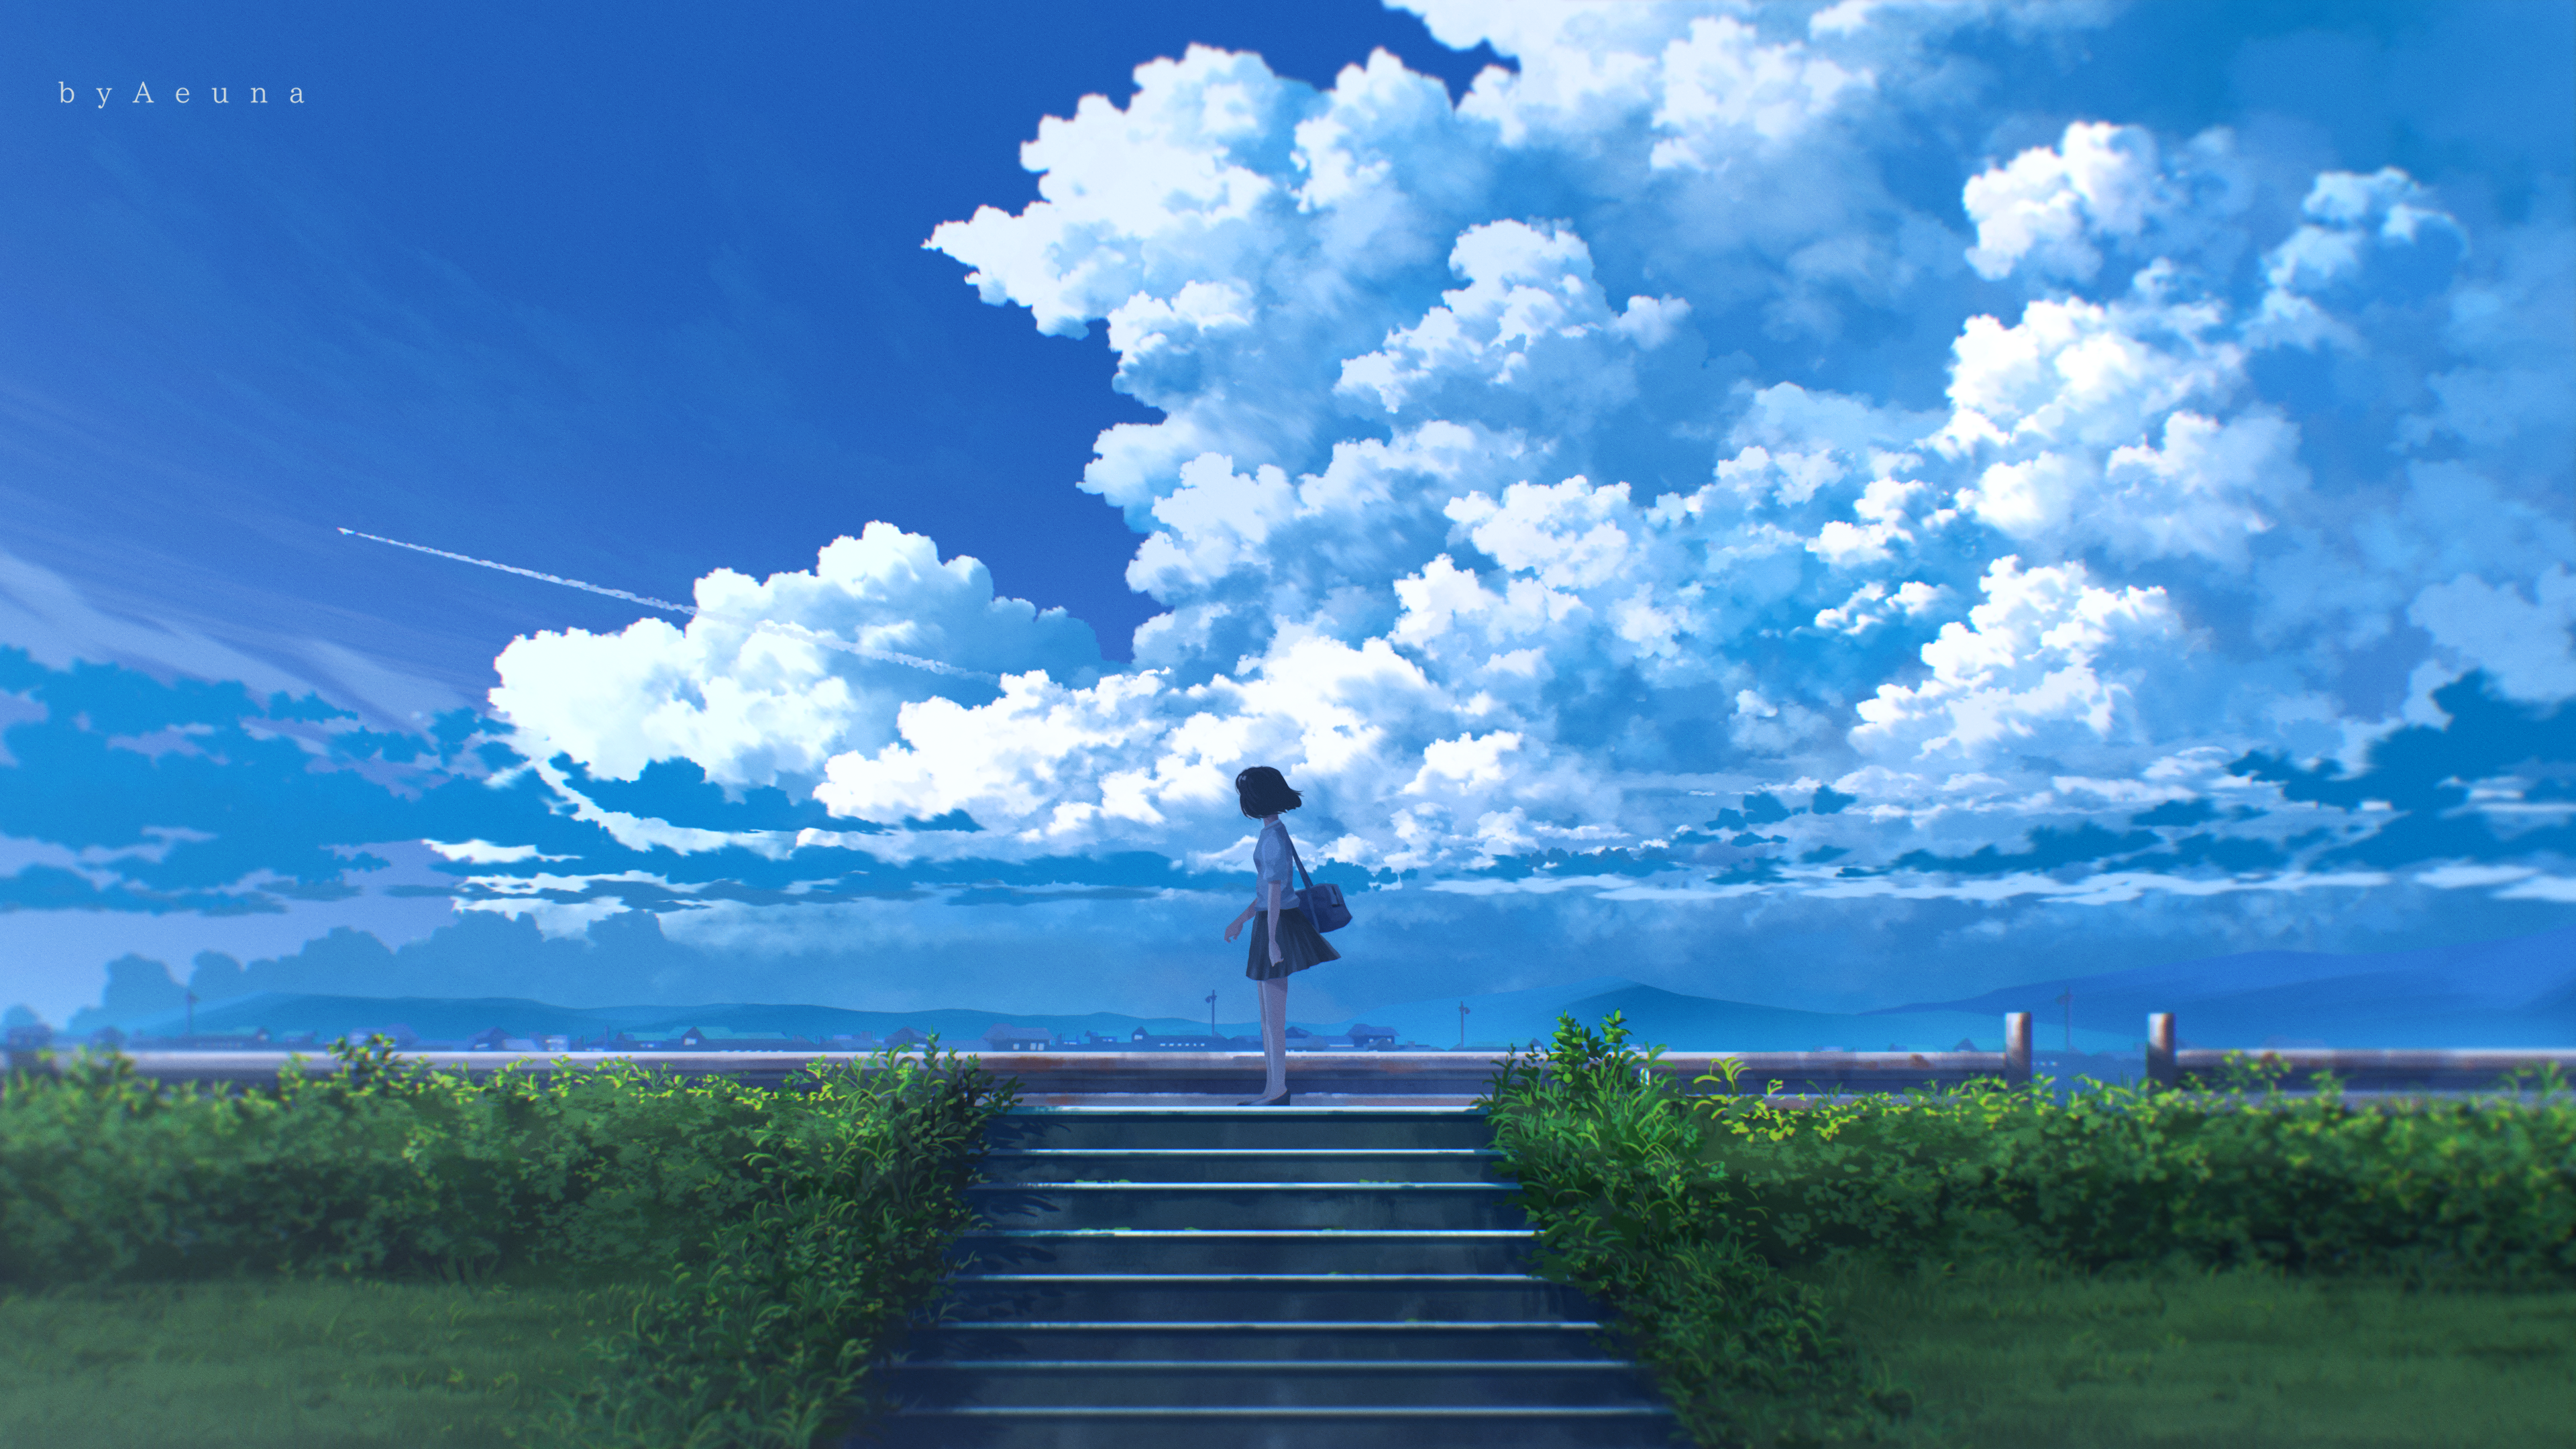 Artwork Digital Art Illustration Anime Anime Girls Sky Clouds Airplane Grass Stairs Skirt Short Hair 3840x2160